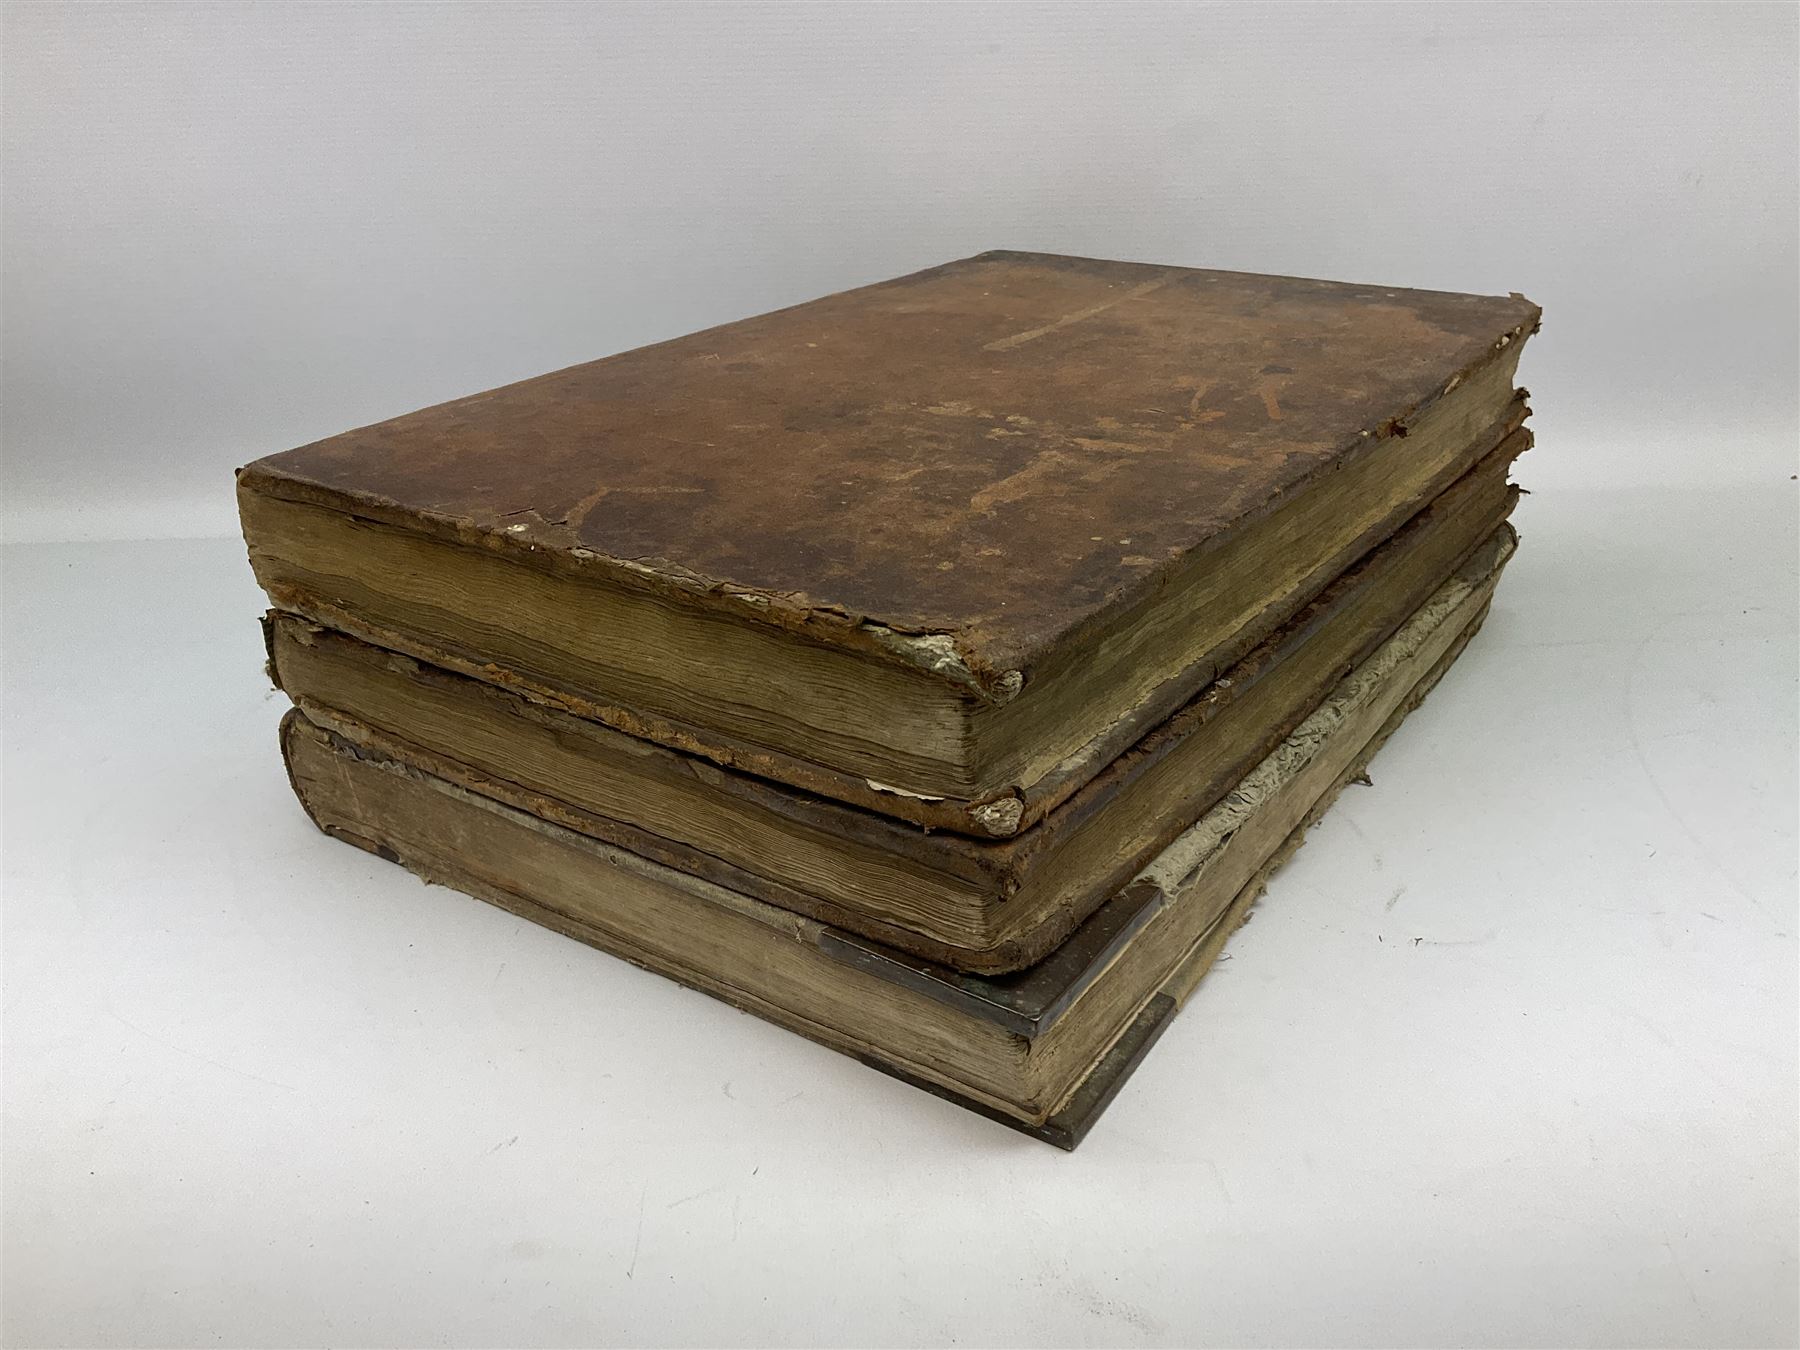 Six 19th century leather bound books of music comprising Graduale Juxta Missale Romanum and Antiphon - Image 4 of 21